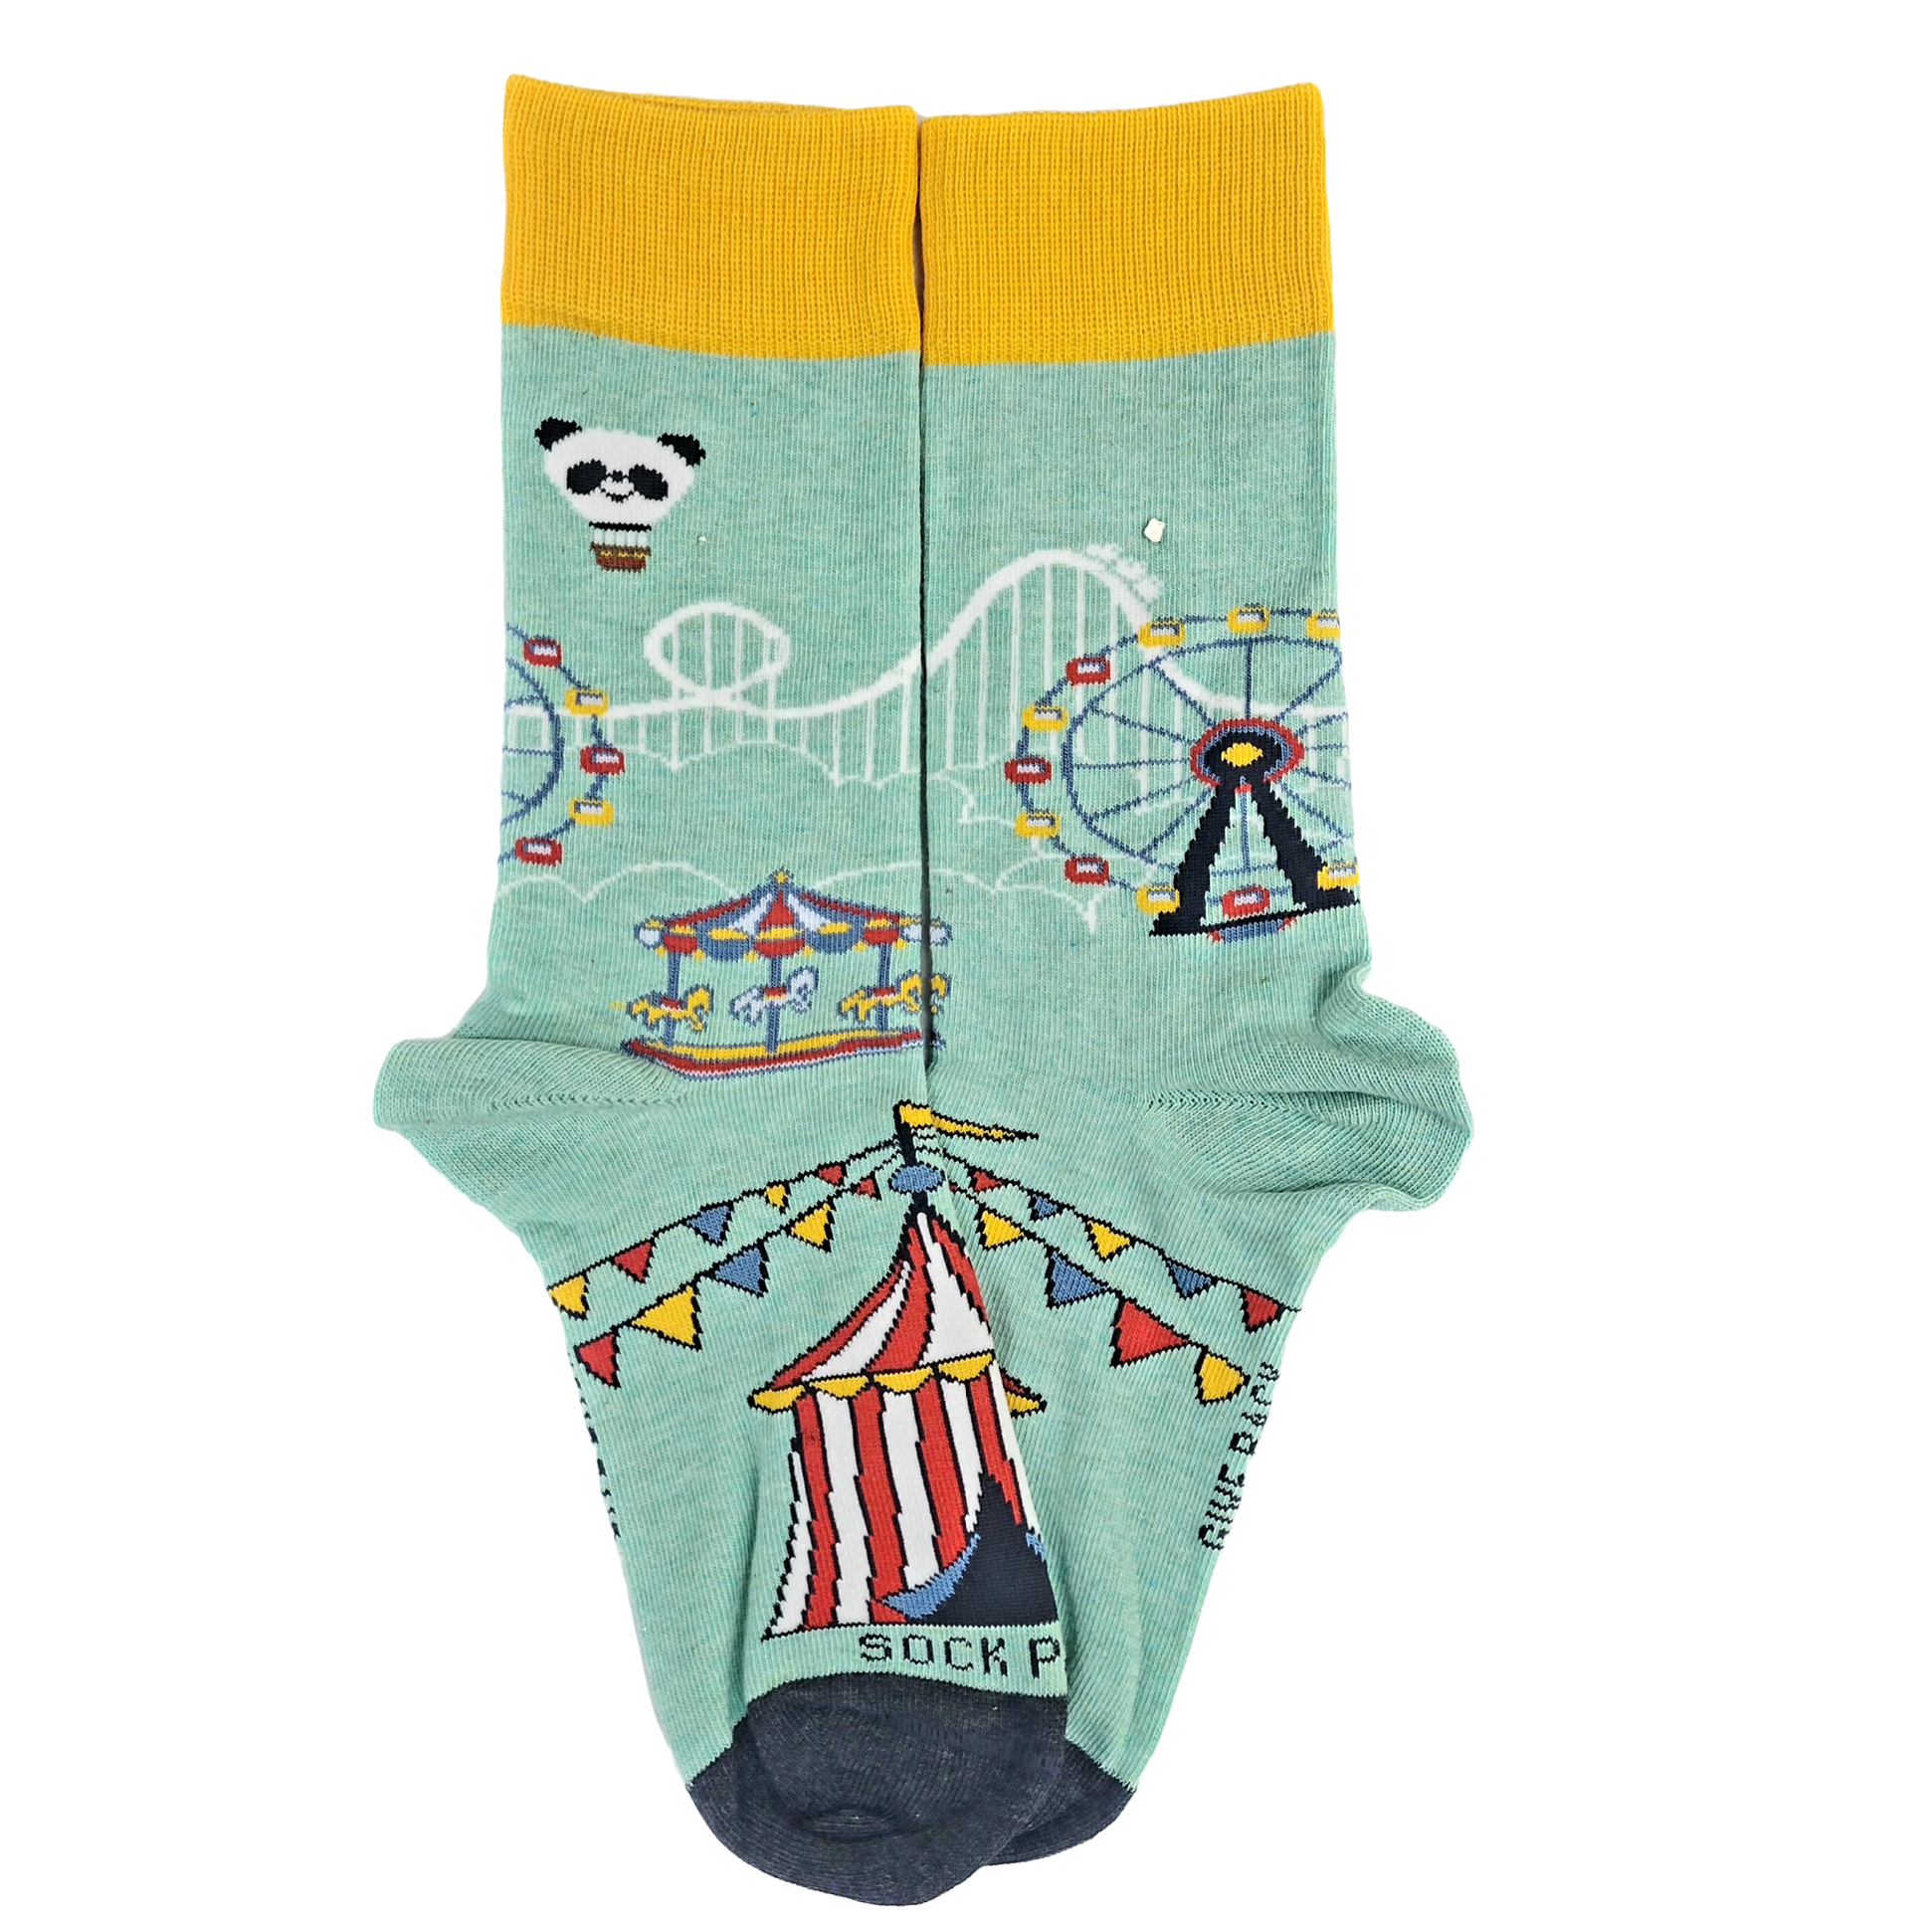 Circus Scene Roller Coaster Socks from the Sock Panda (Adult Small)